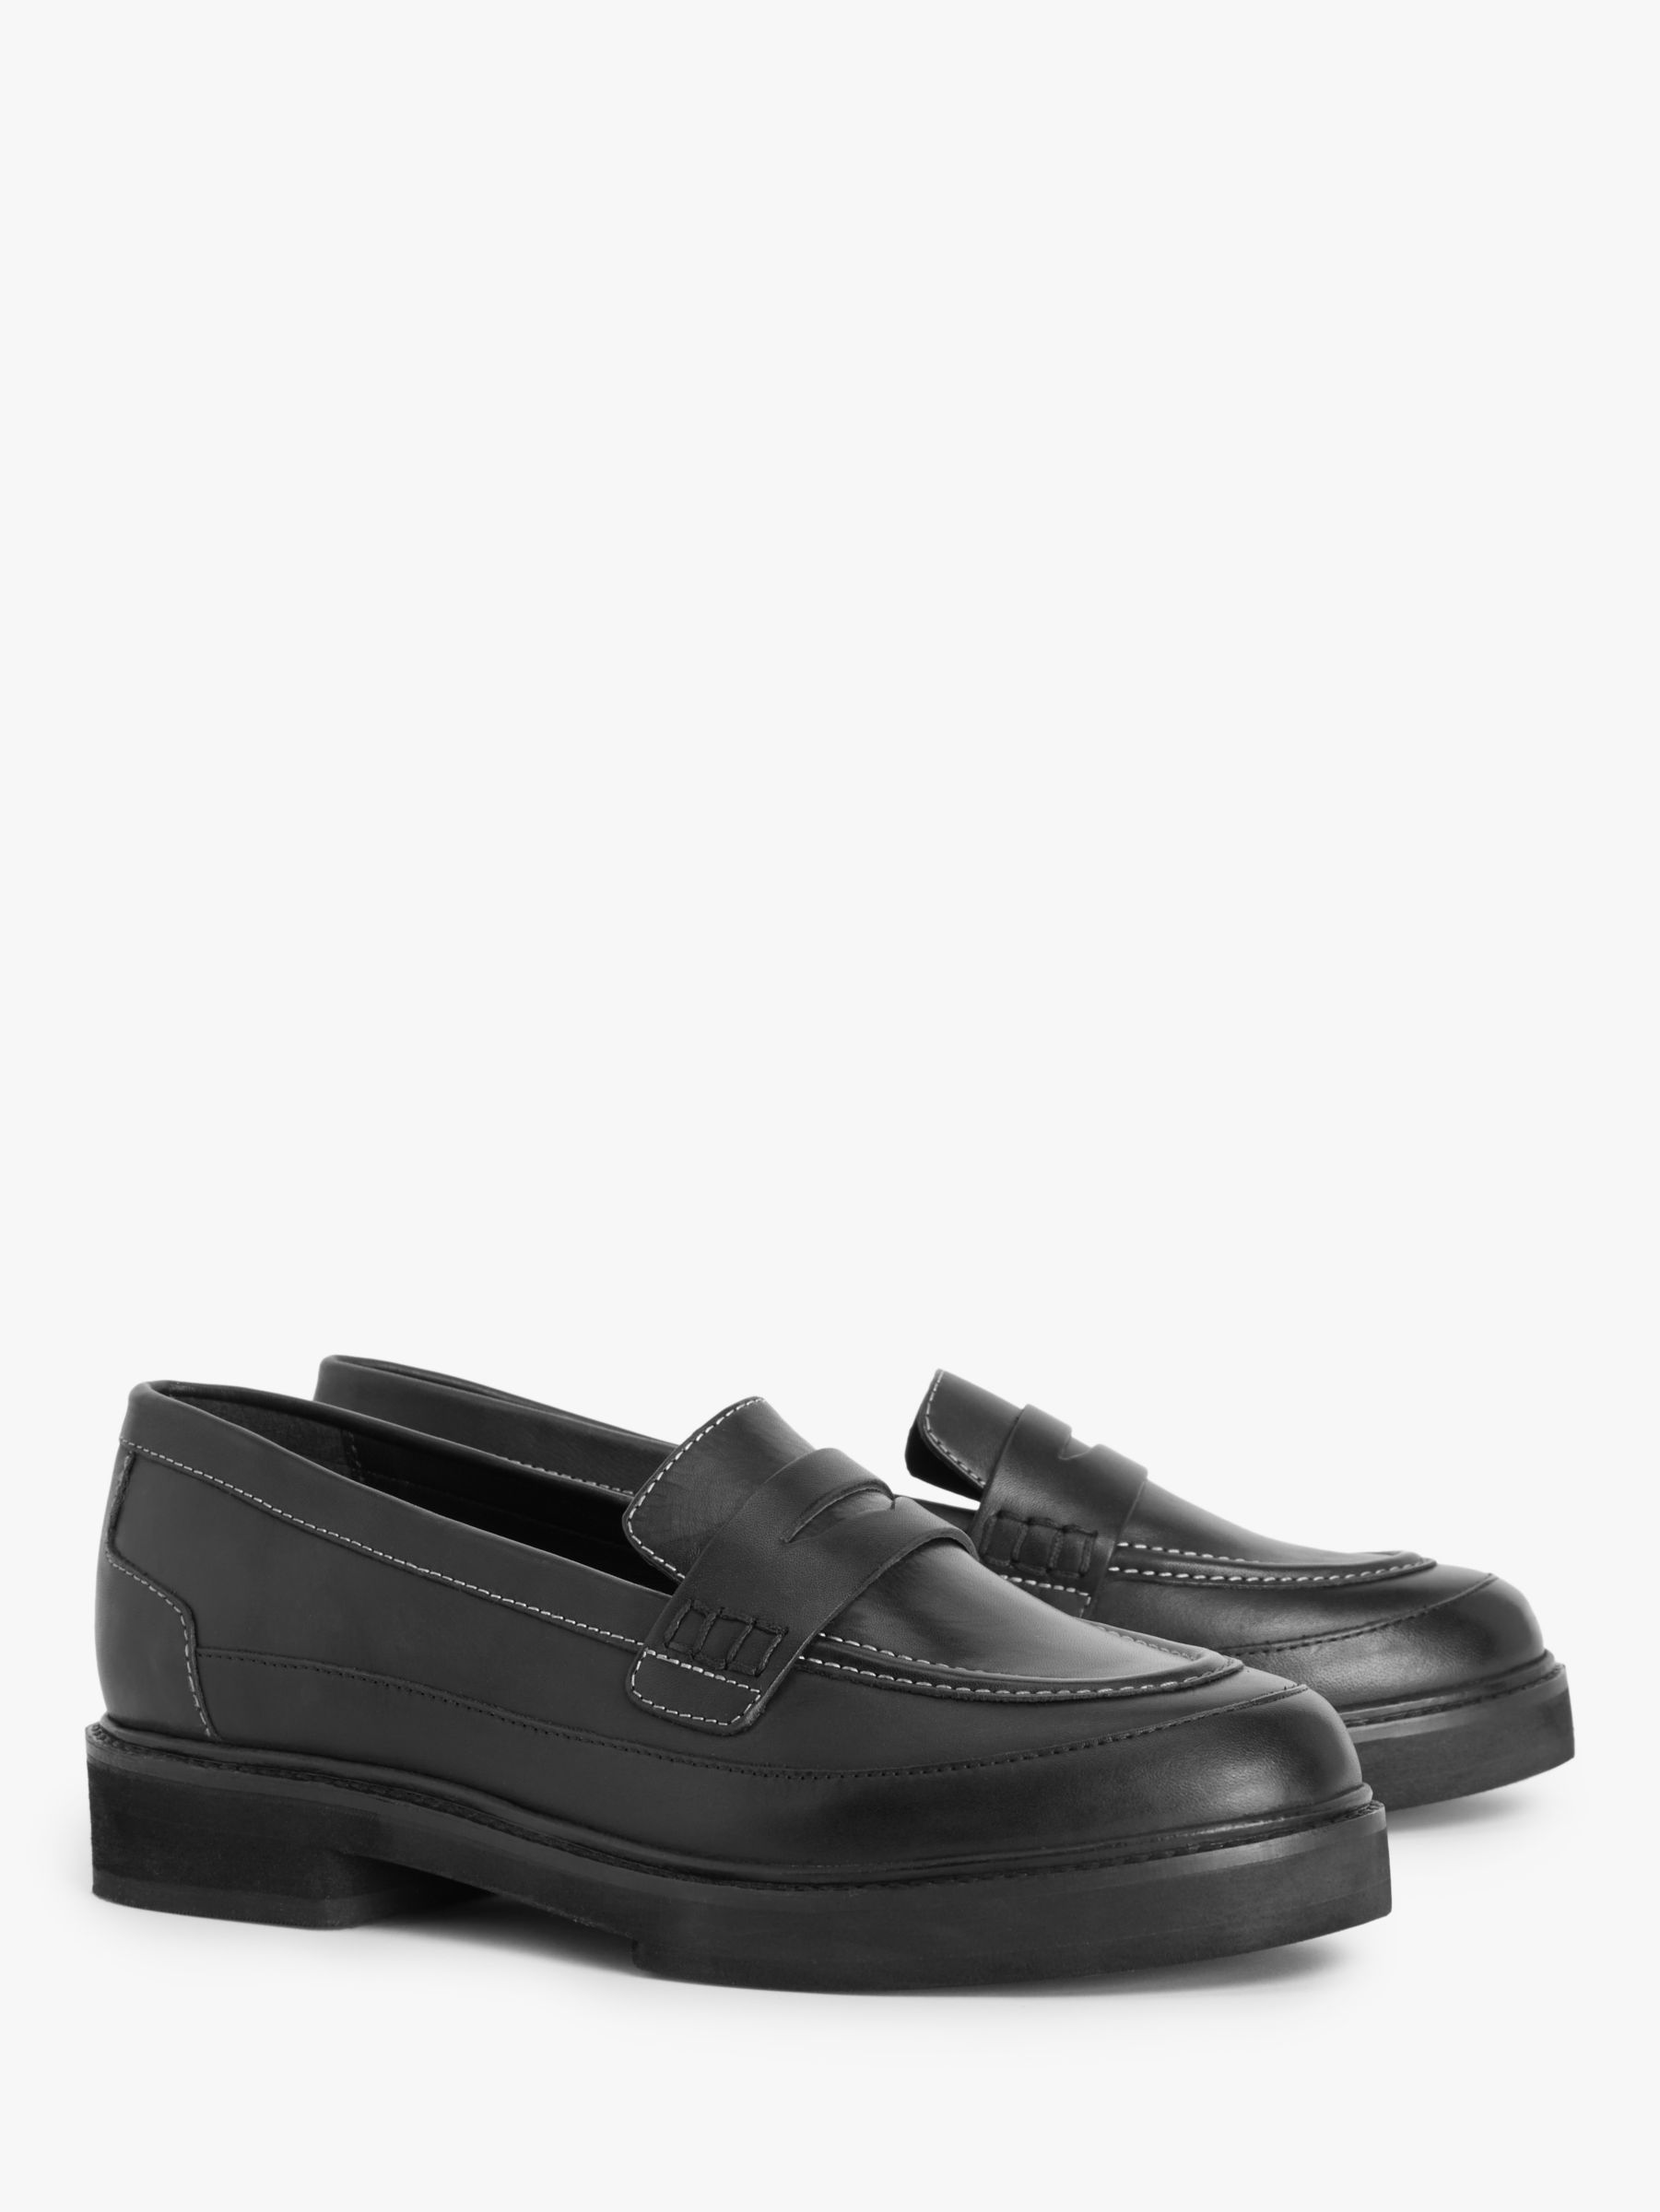 Kin Gemini Leather Flatform Loafers, Black at John Lewis & Partners